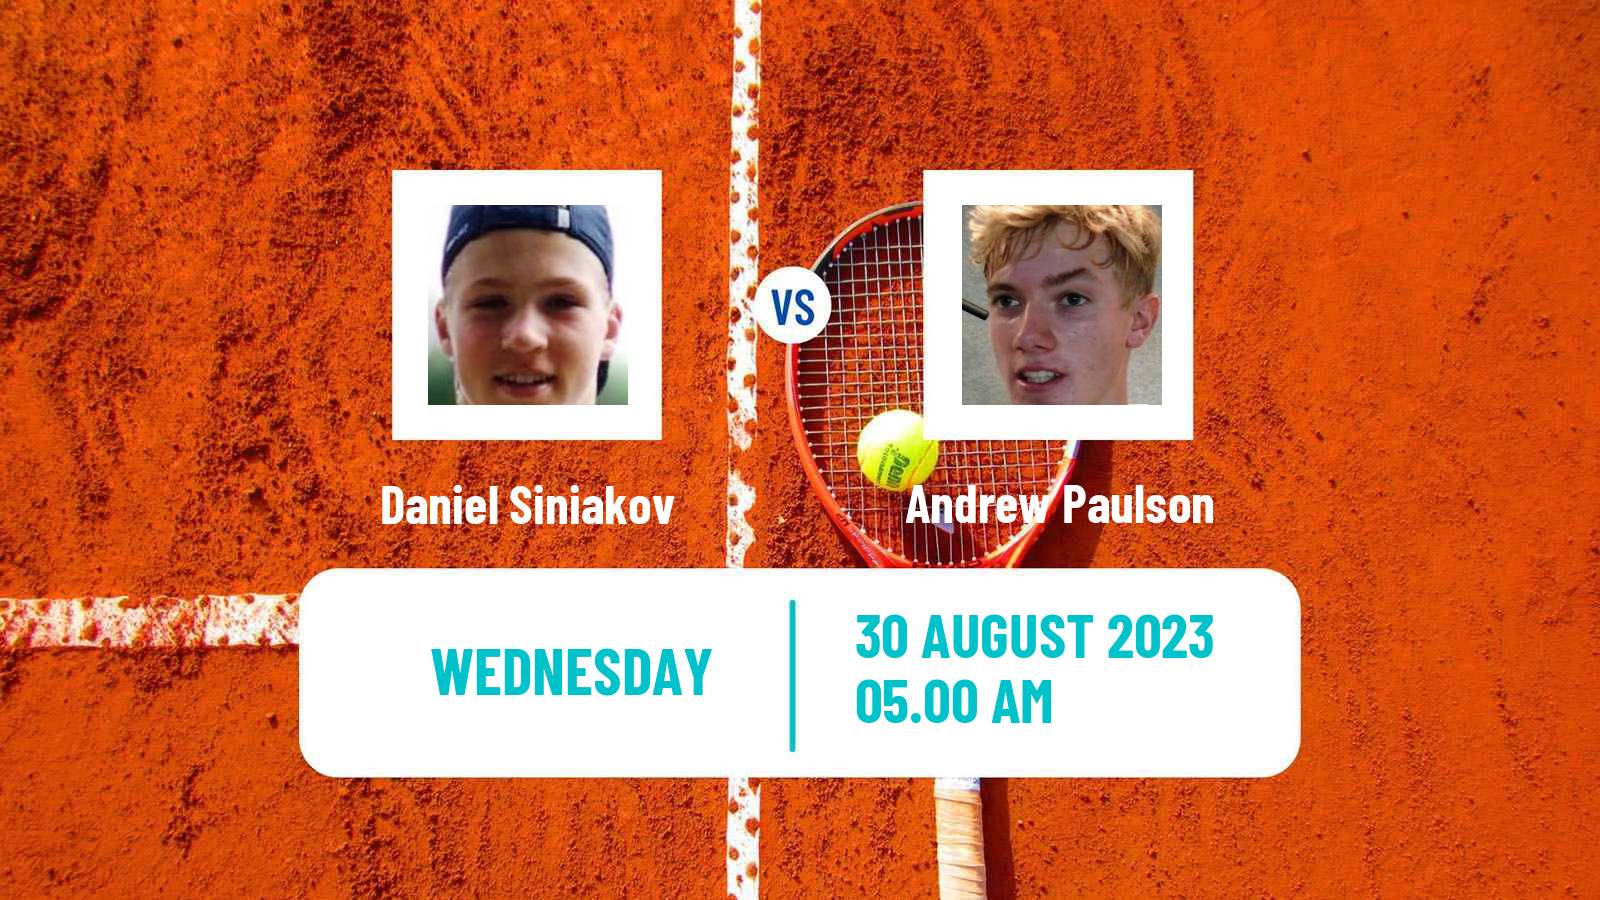 Tennis ITF M25 Jablonec Nad Nisou 2 Men Daniel Siniakov - Andrew Paulson